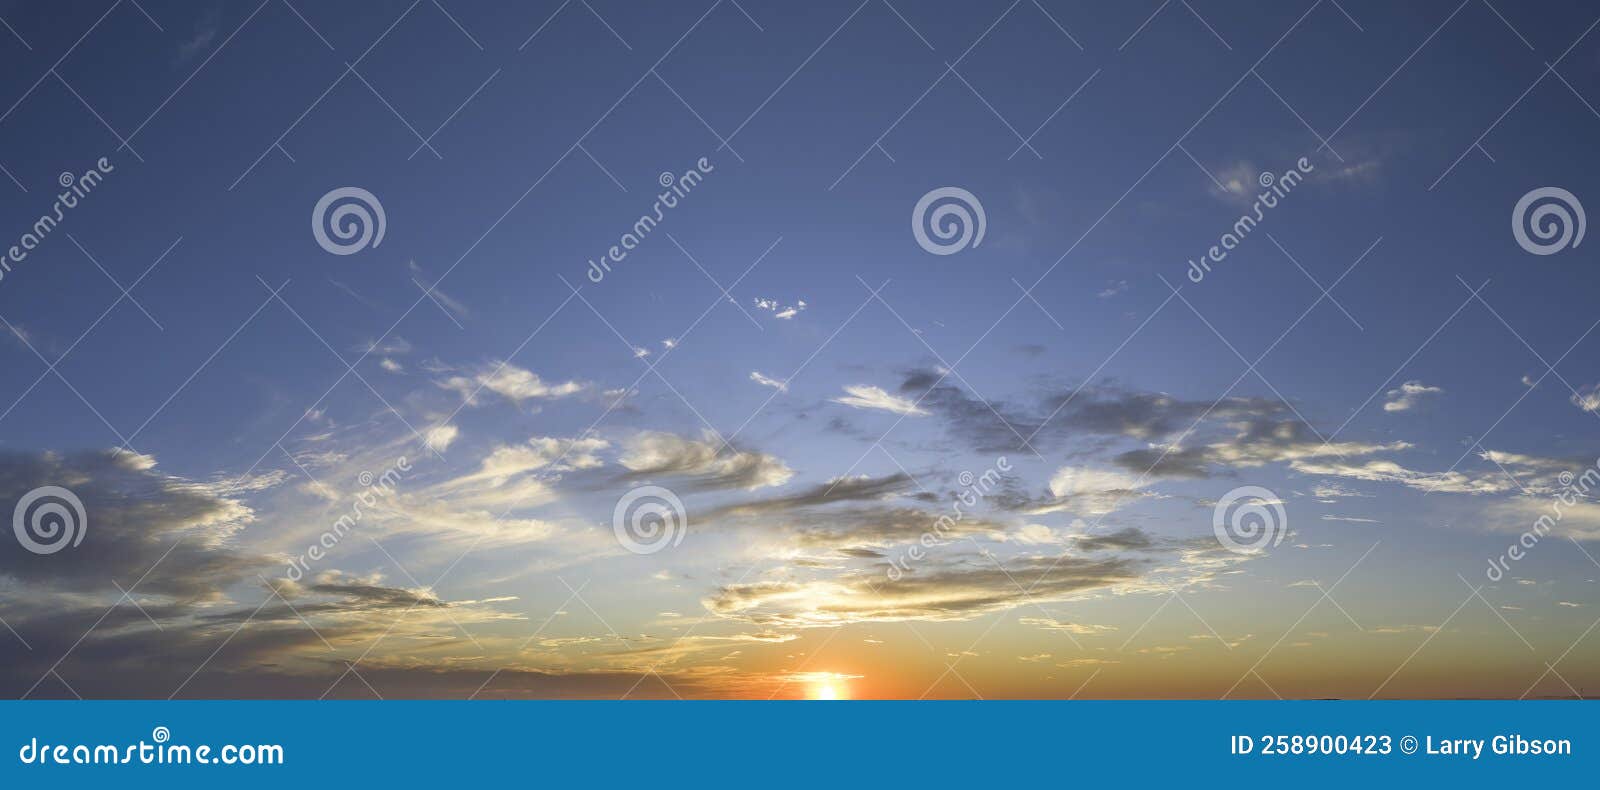 blue sky with clounds sunset